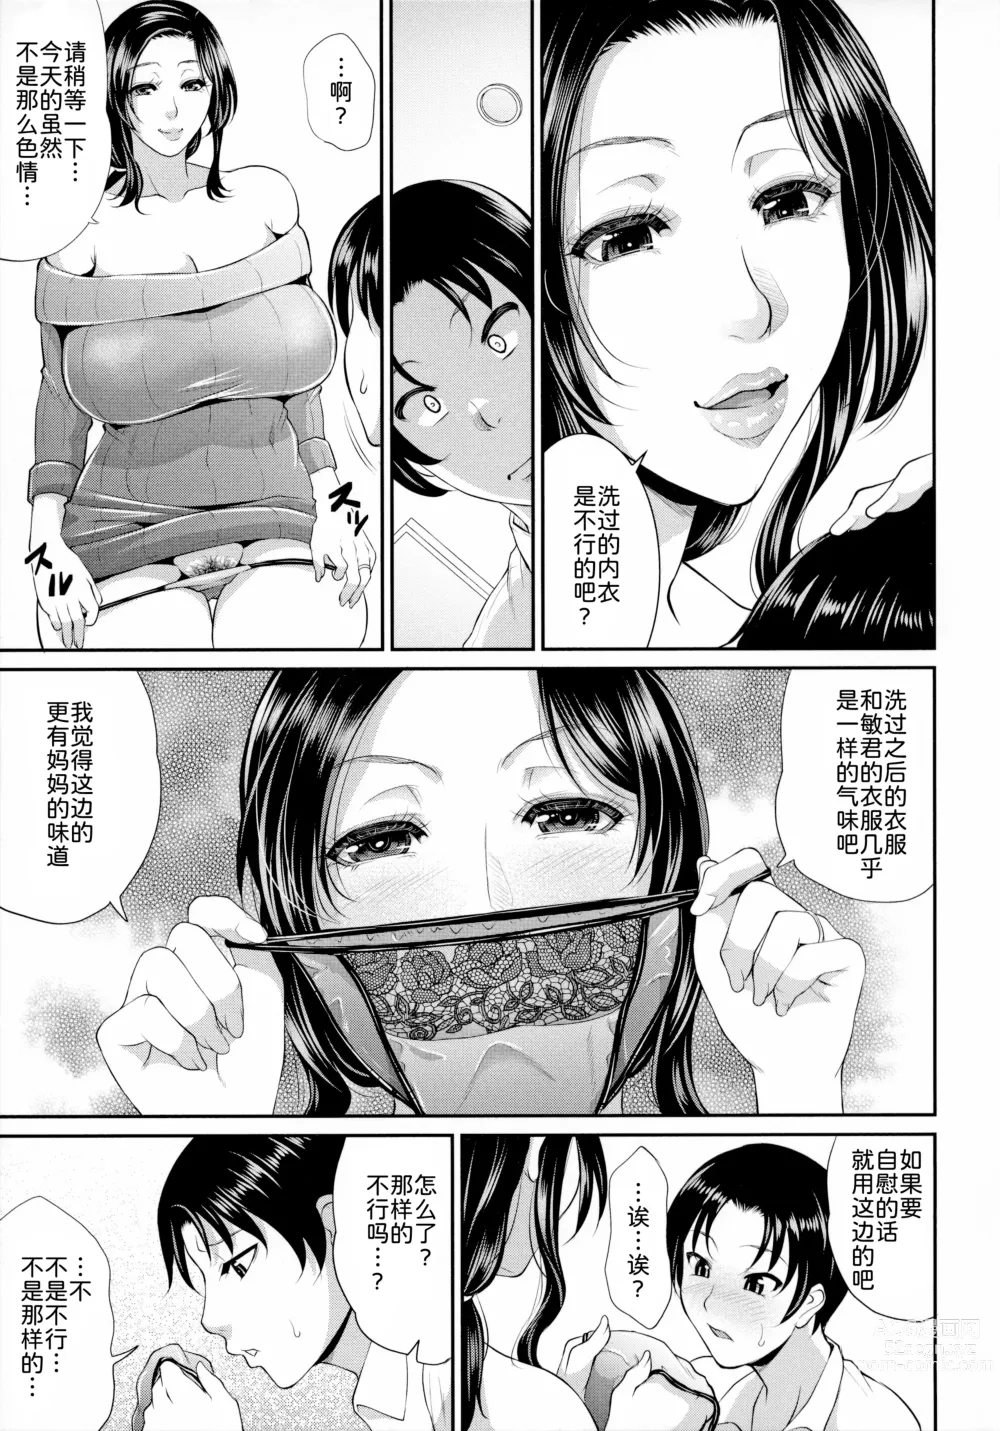 Page 10 of manga Uruwashi no Wife